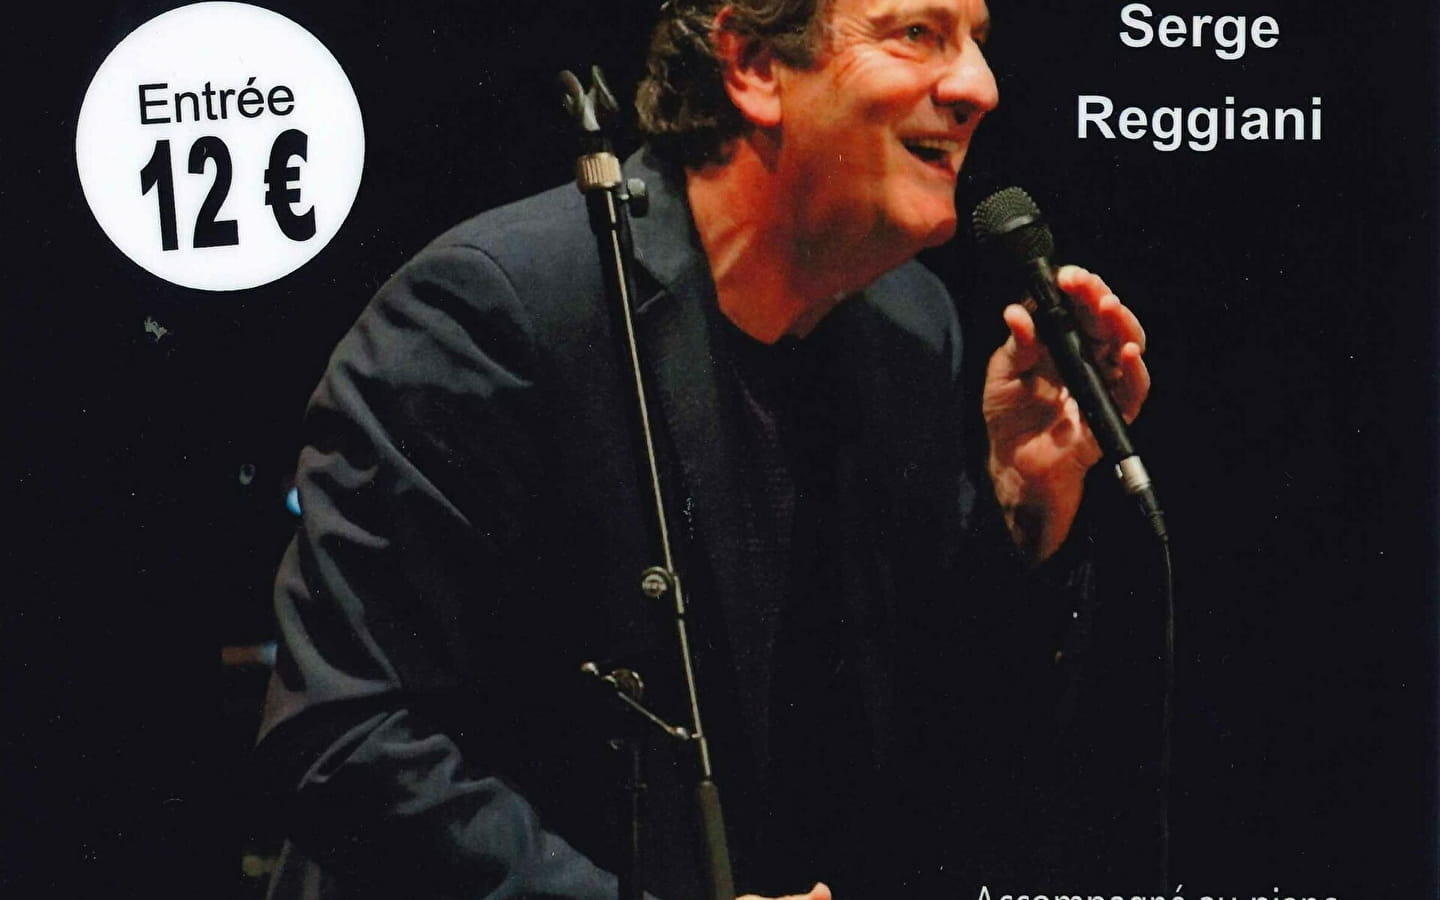 Concert - Show in tribute to Serge Reggiani